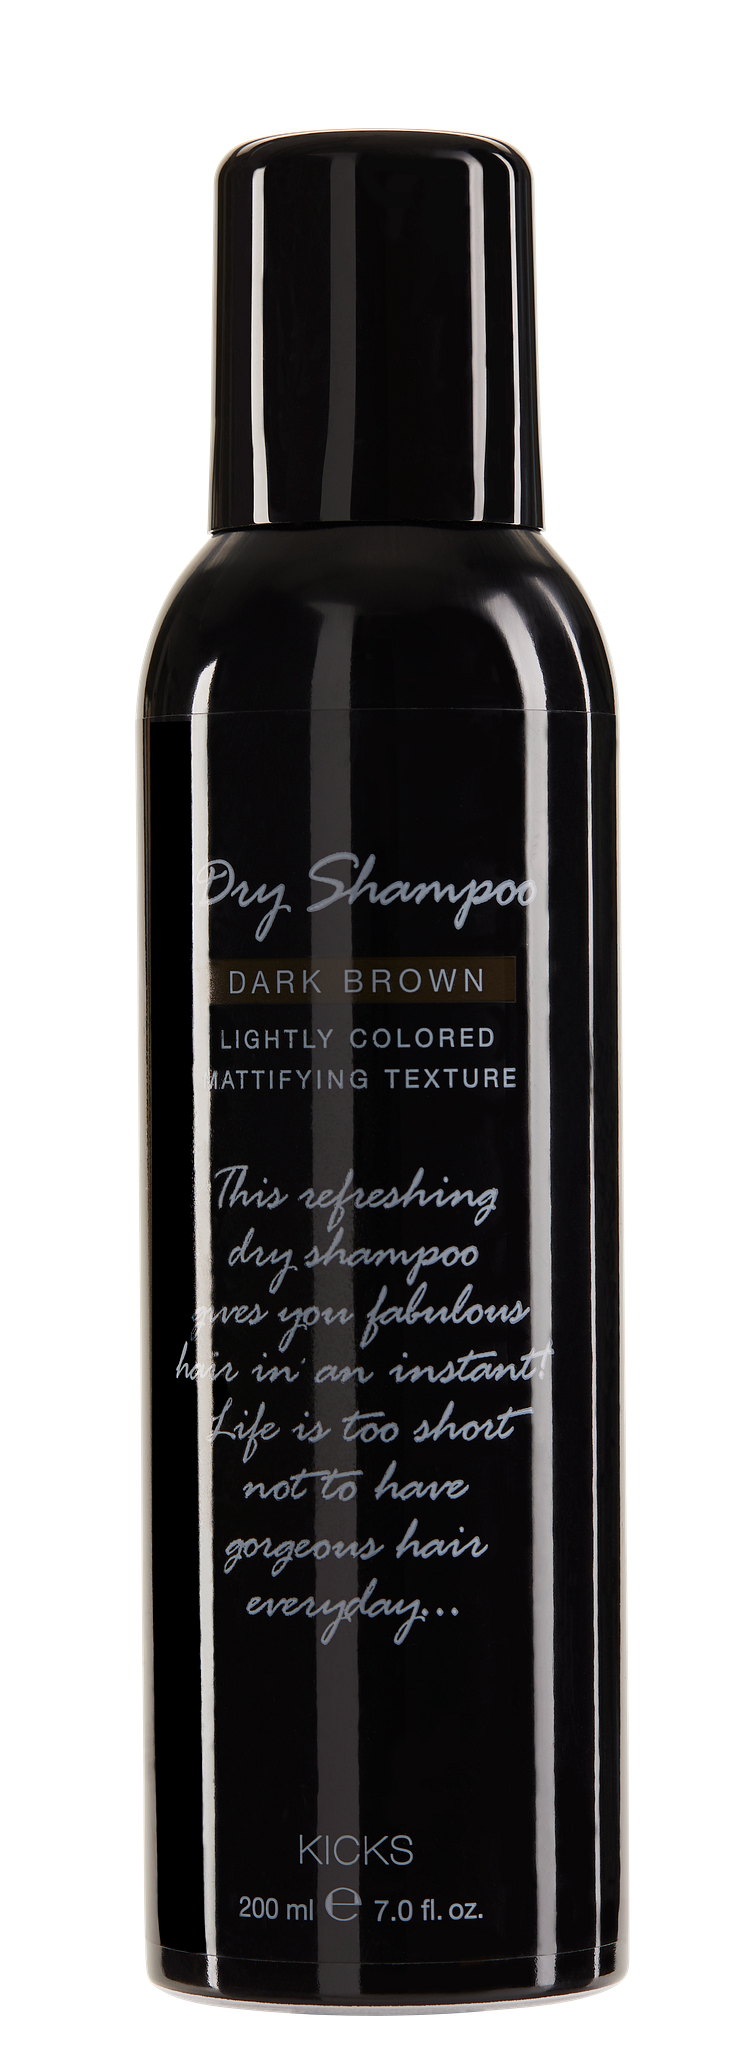 KICKS Dry Shampoo Dark Brown 200ml